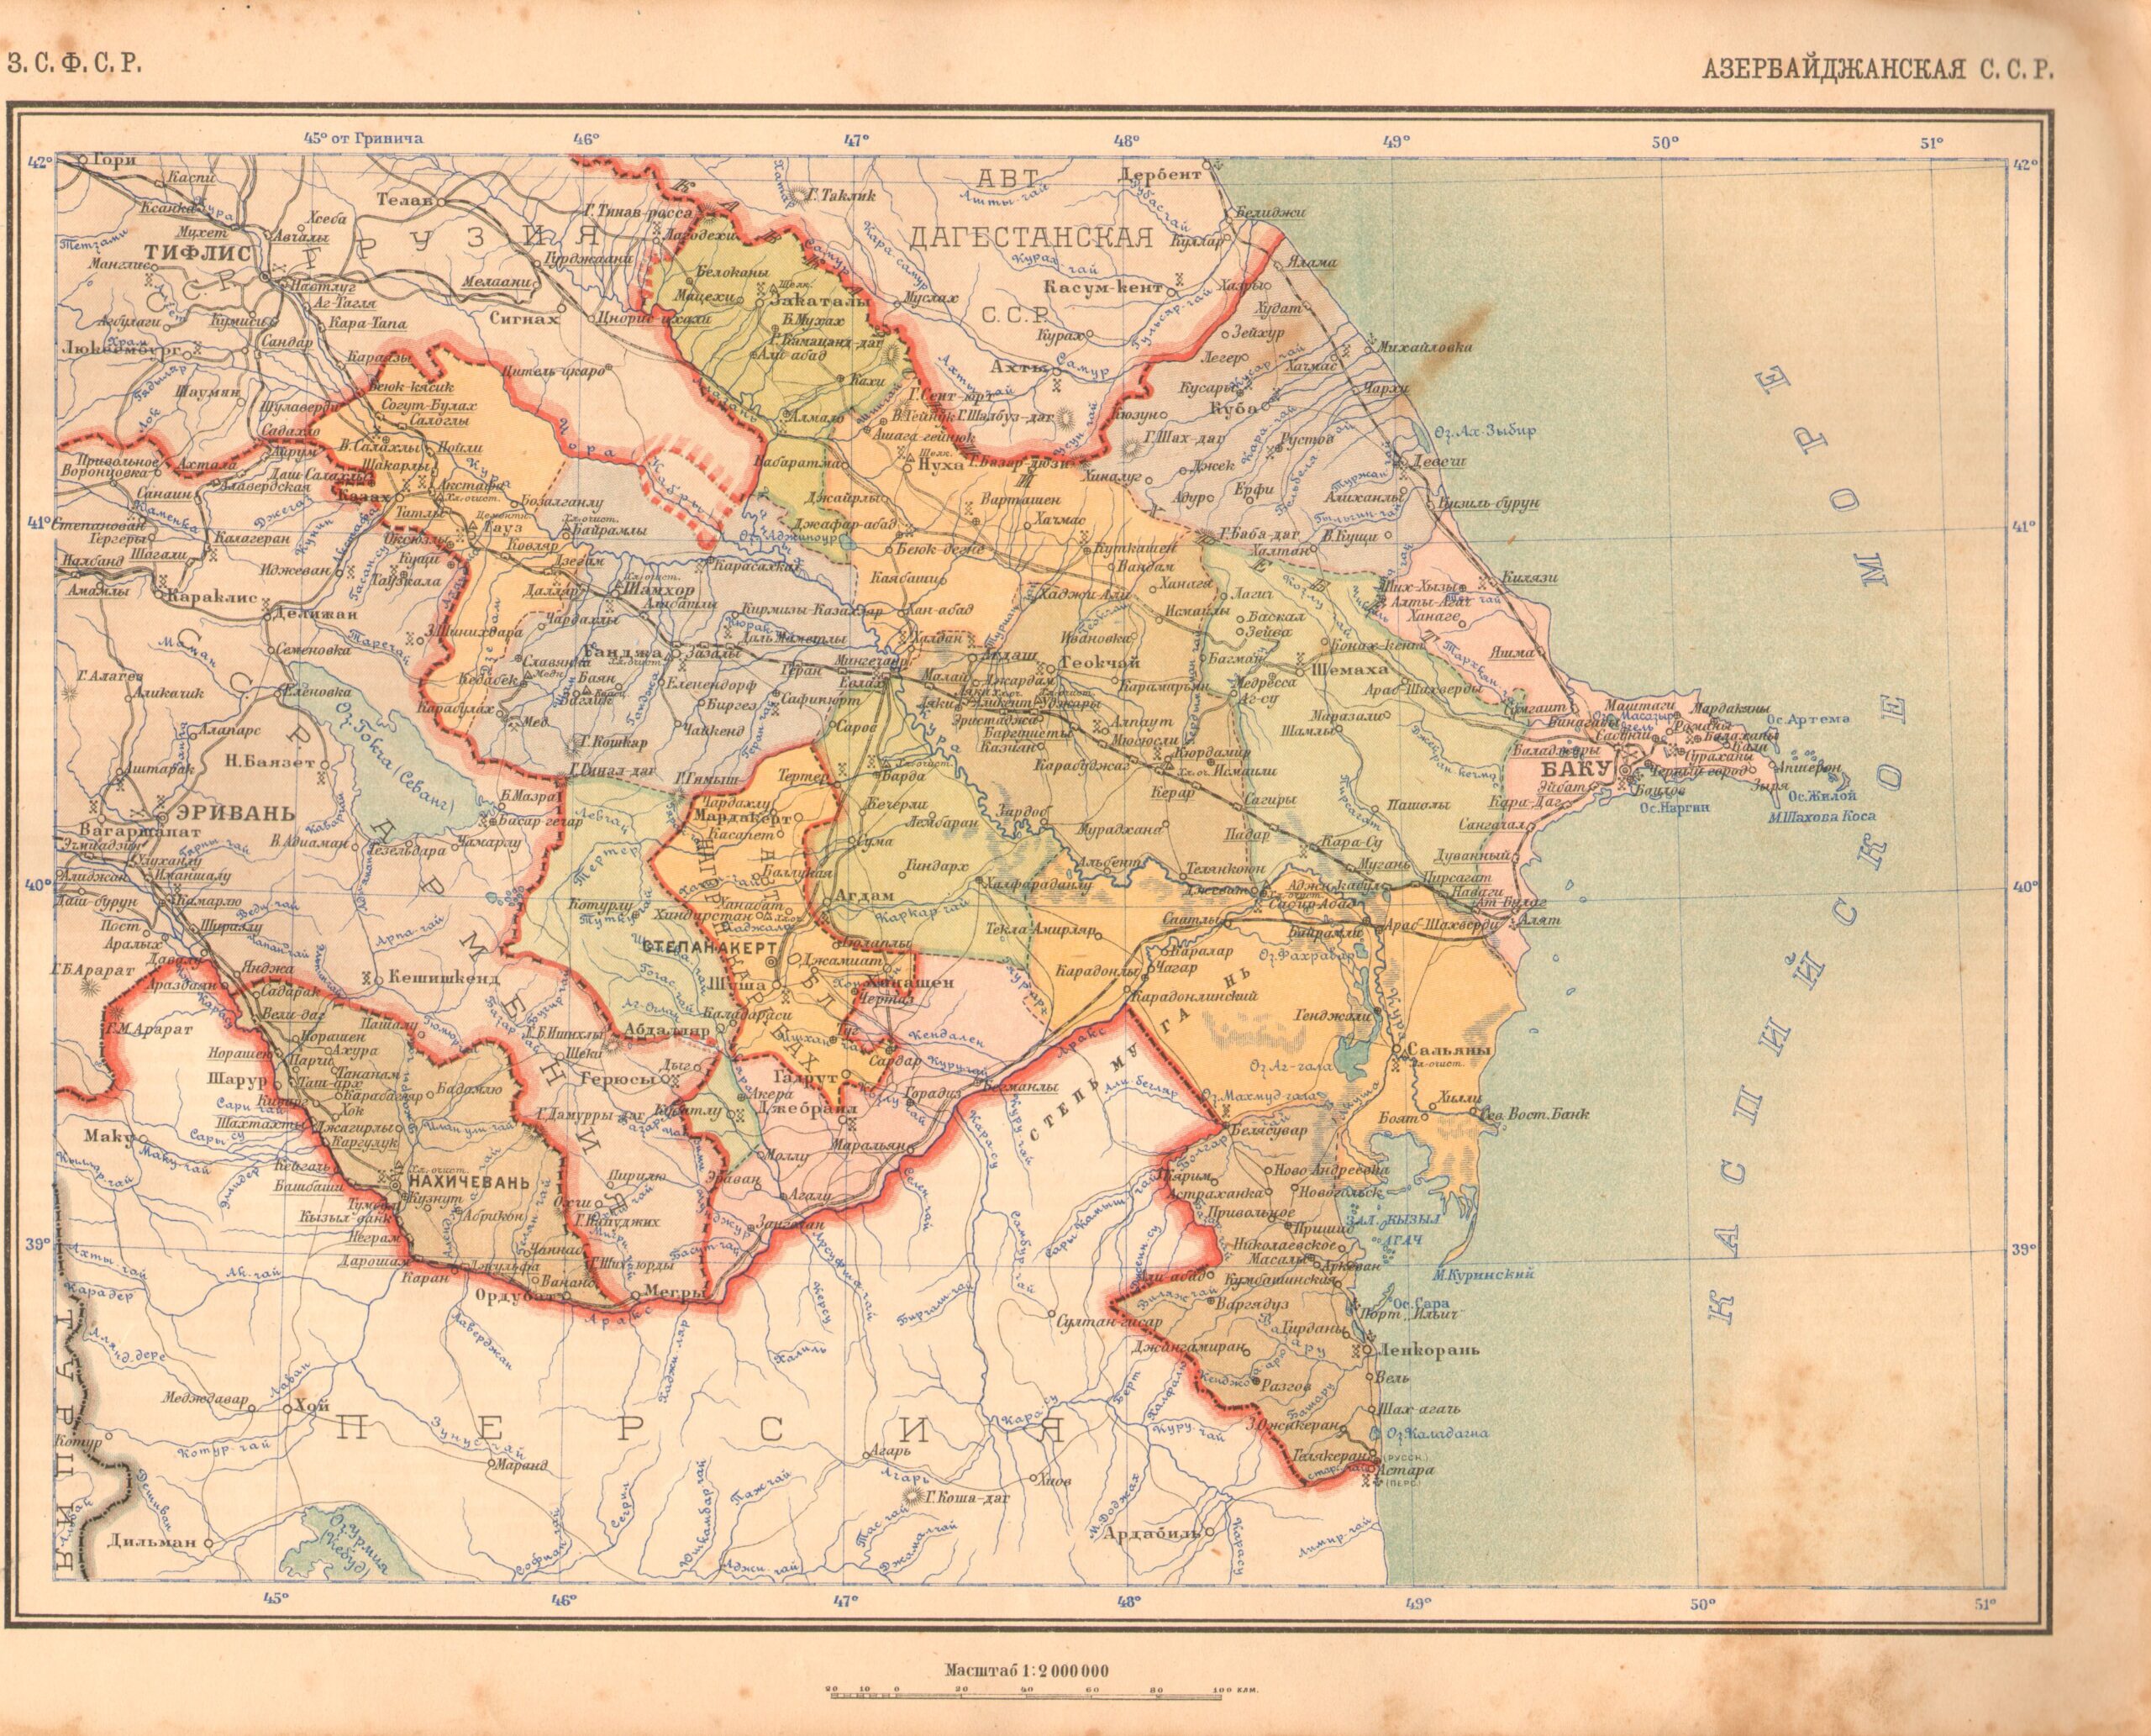 Nagorno Karabakh as an autonomous region within Azerbaijan SSR, 1928.